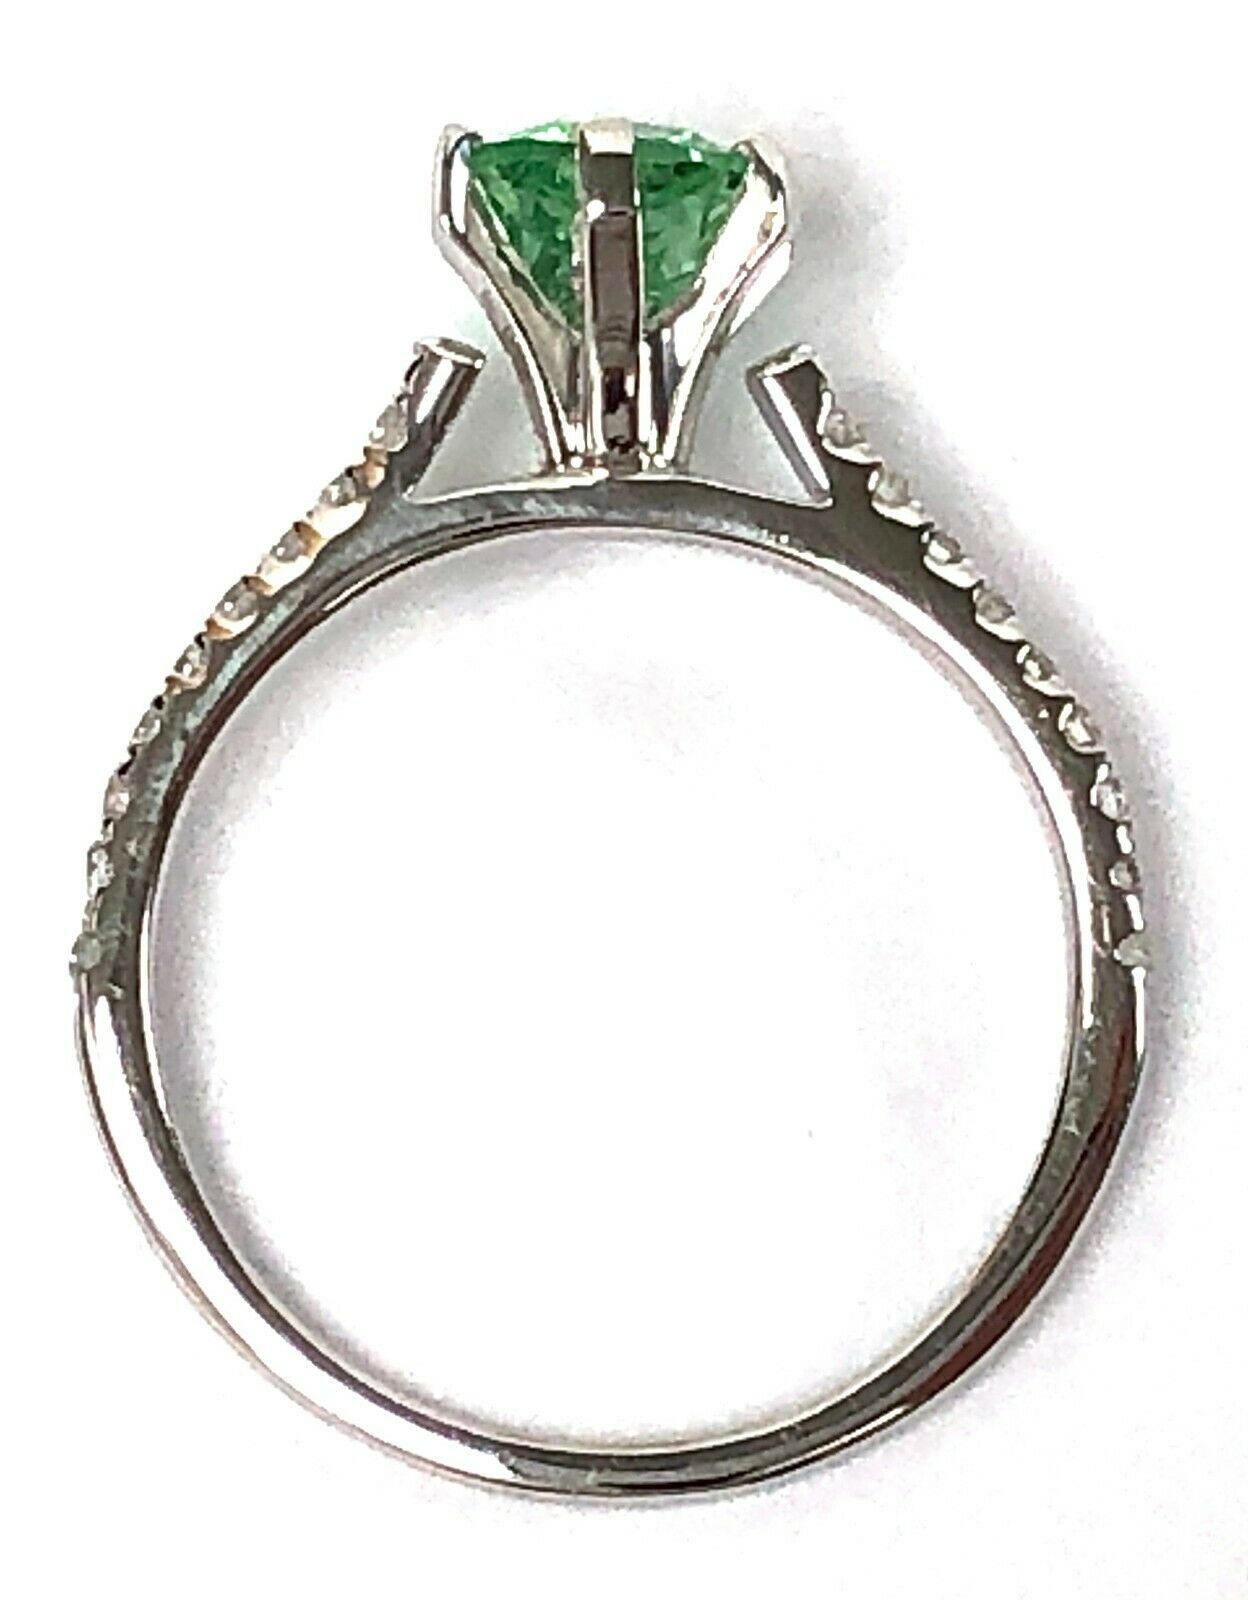 IGI 1.24 ct. Neon Green Paraiba Tourmaline & Diamond Ring in 14K White Gold